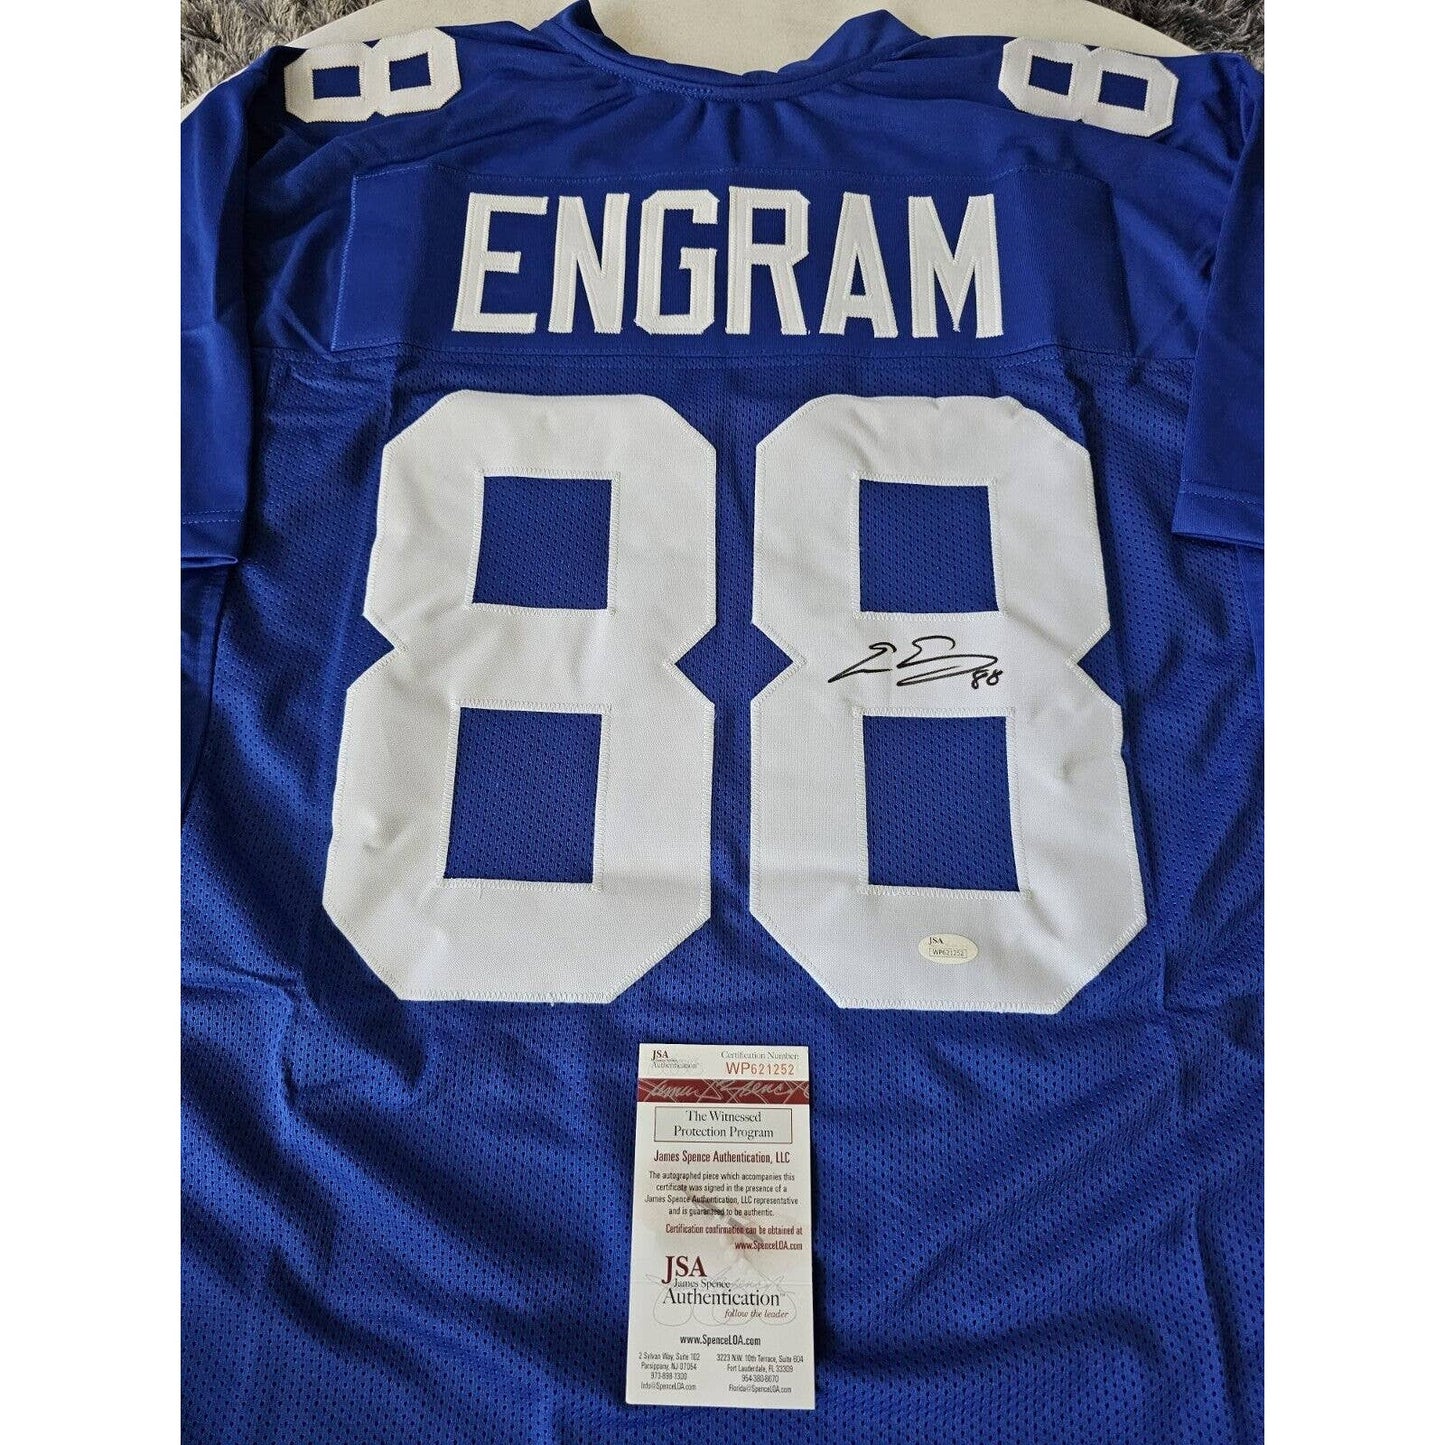 Evan Engram Autographed/Signed Jersey JSA COA New York Giants Star TE